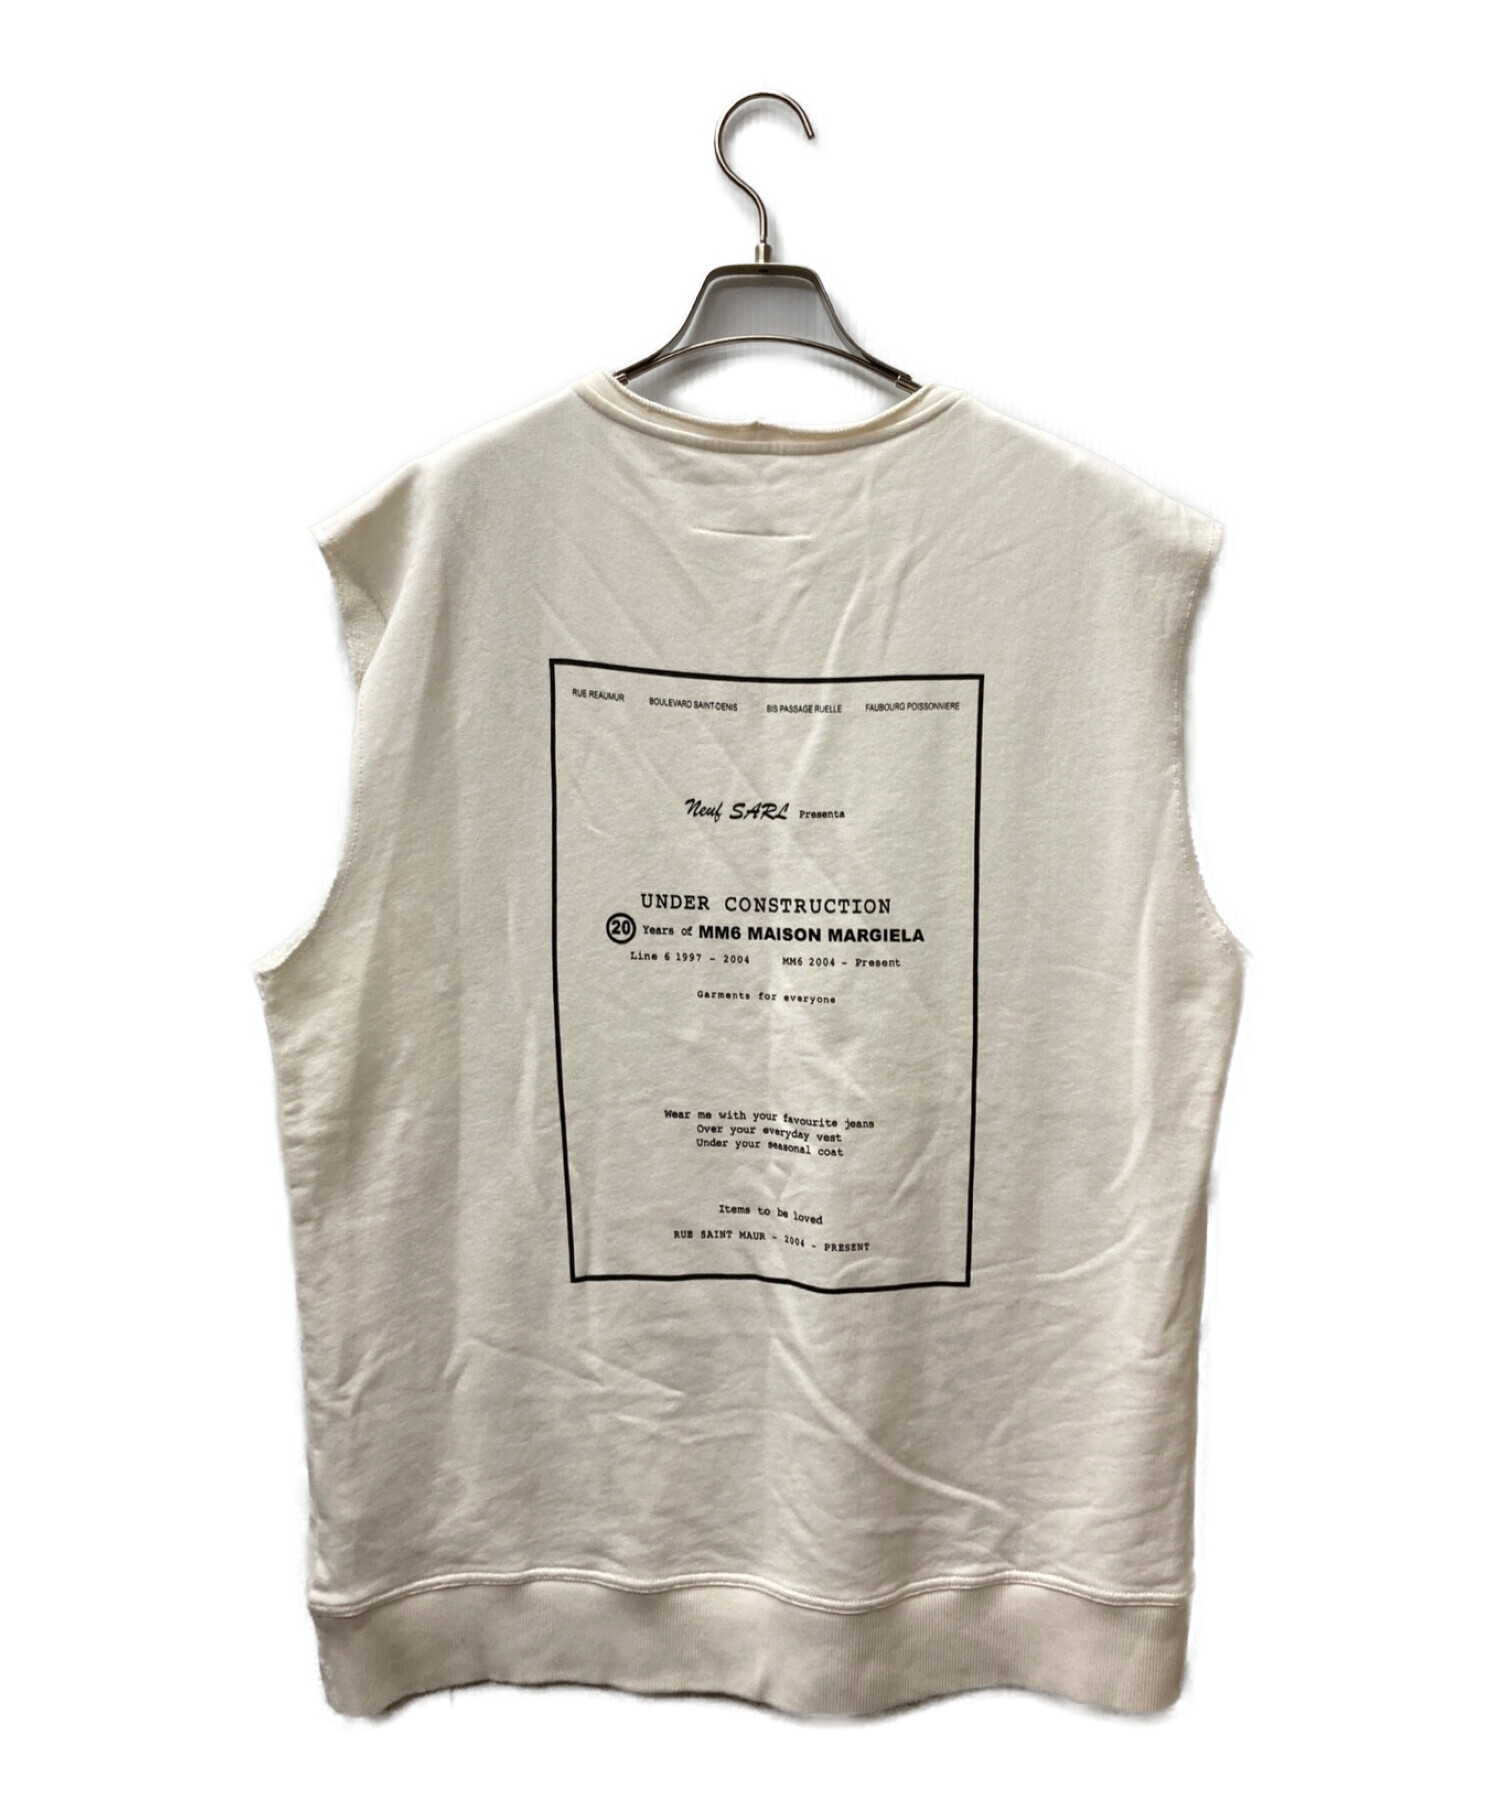 MM6 Maison Margiela (エムエムシックス メゾンマルジェラ) Cut Off Sleeveless Sweat Shirt ホワイト  サイズ:XS